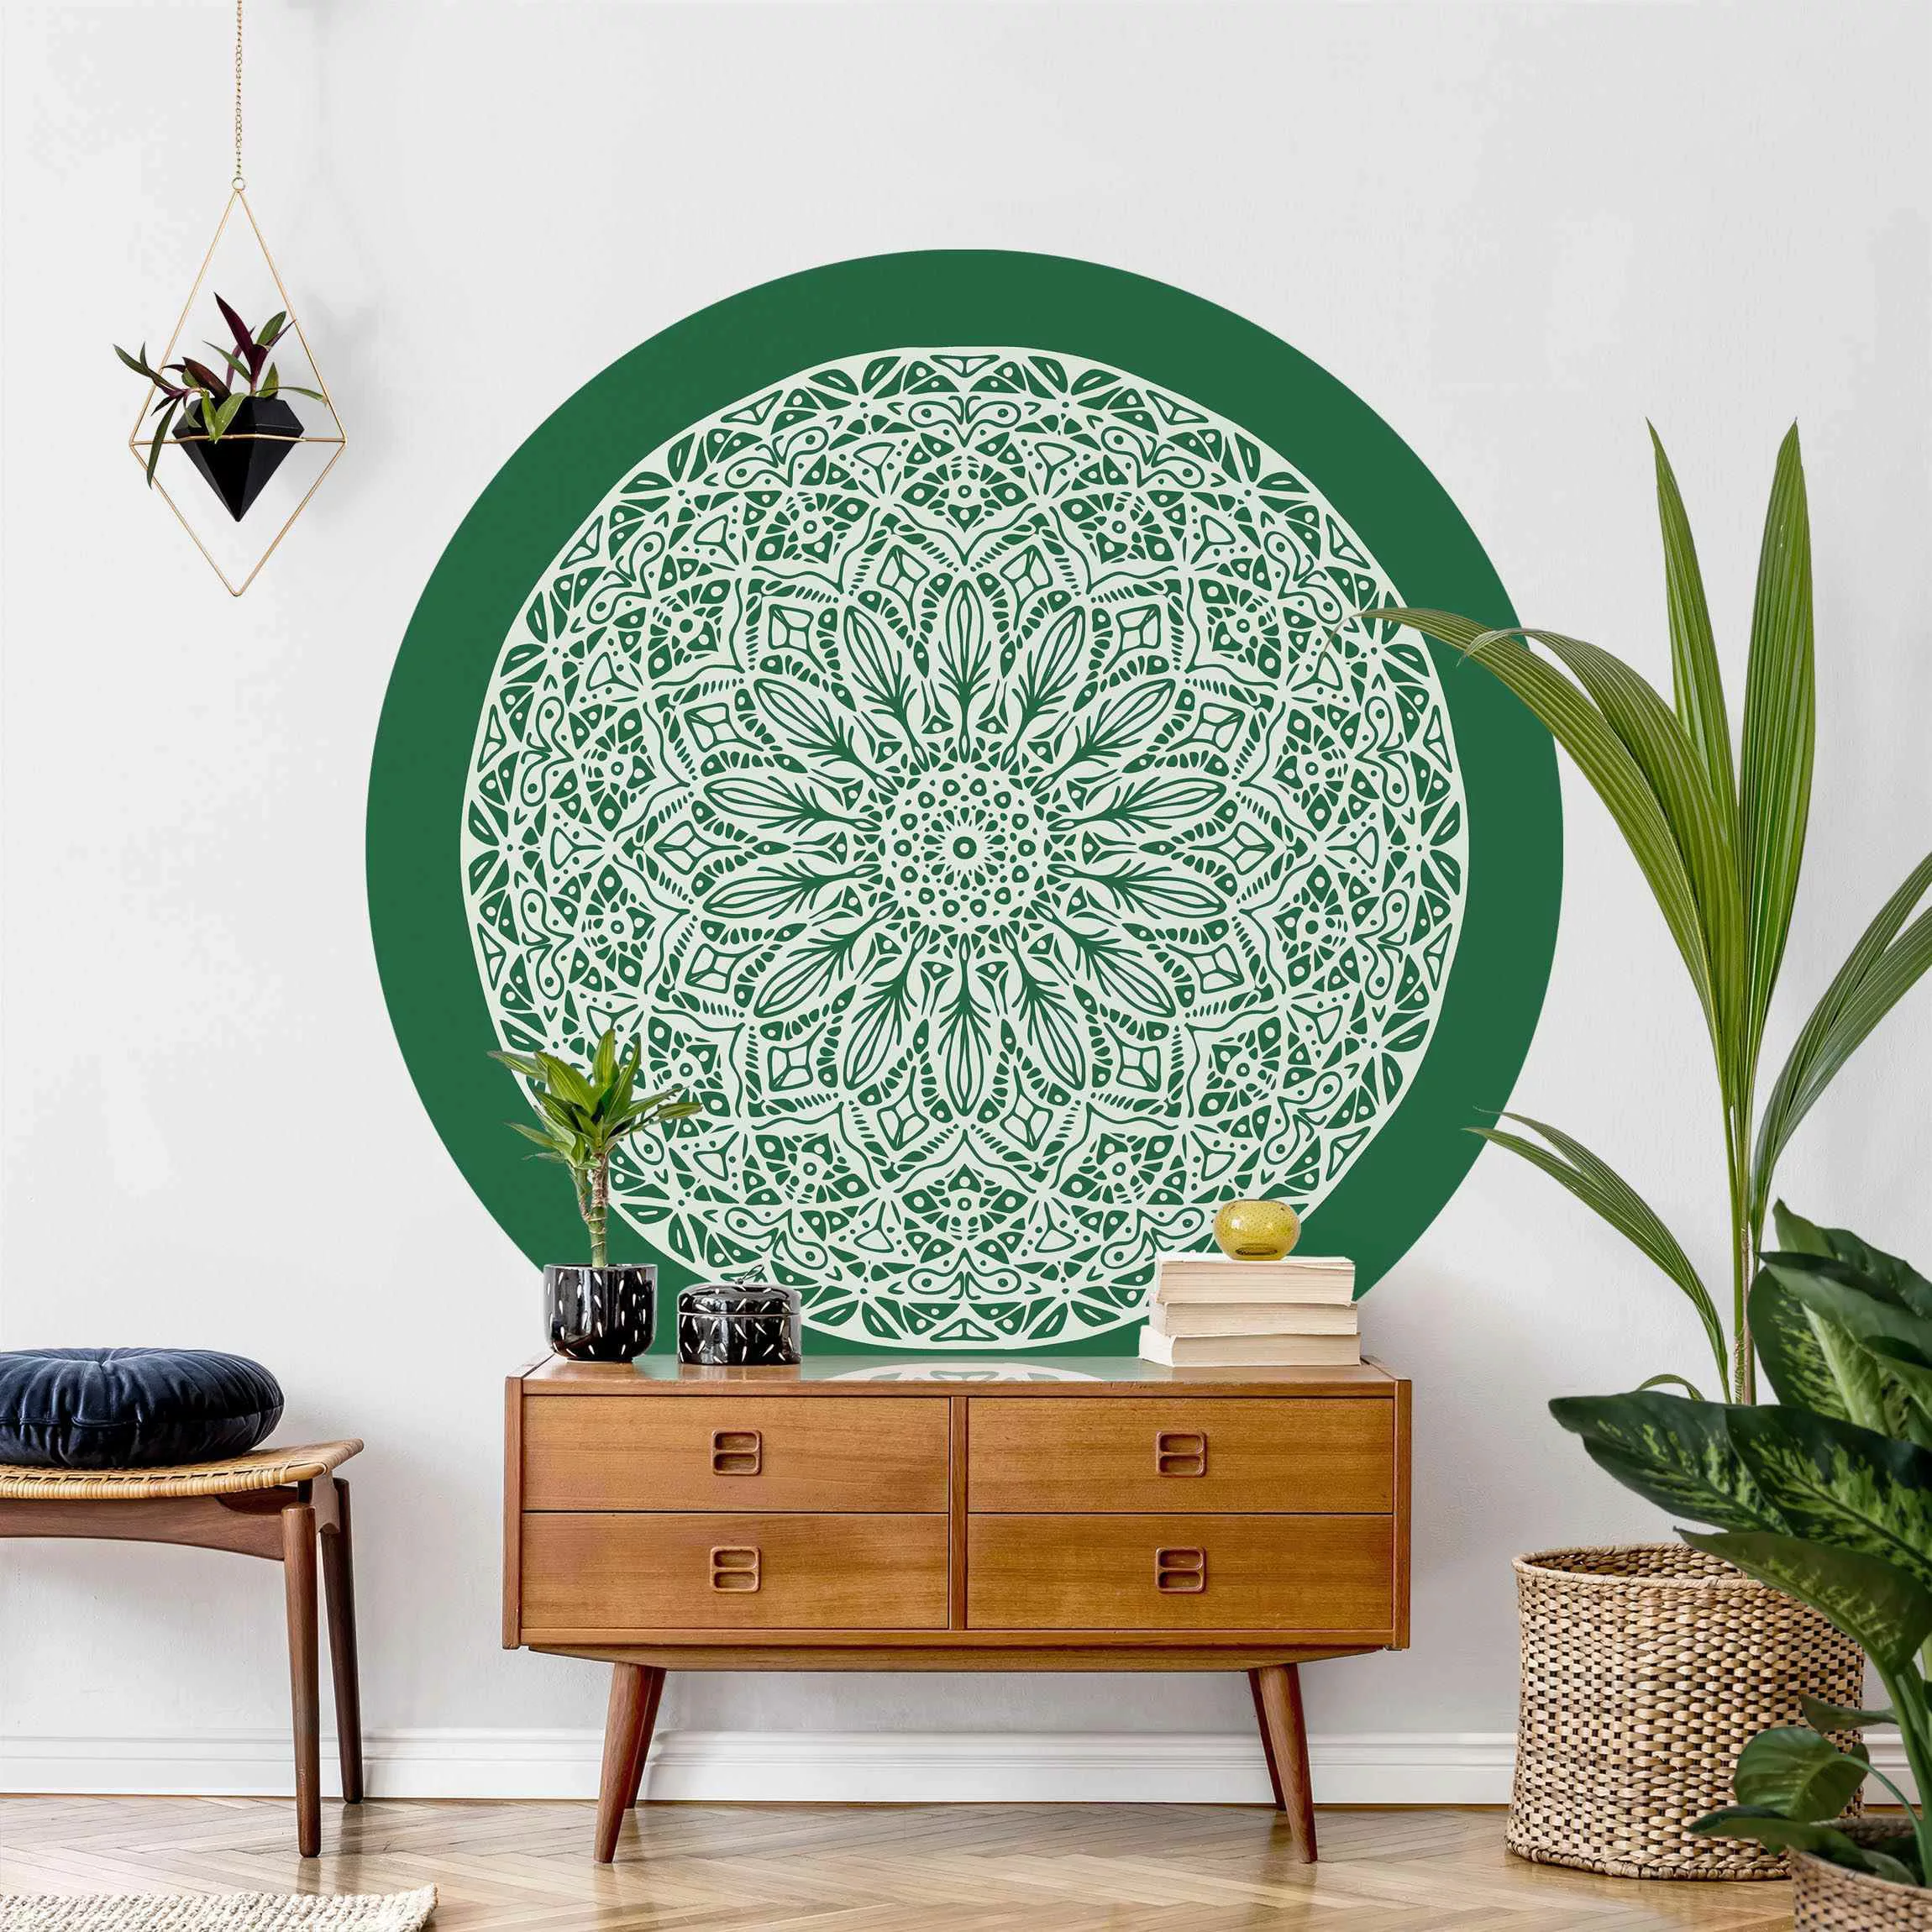 Runde Fototapete selbstklebend Mandala Ornament vor Grün günstig online kaufen